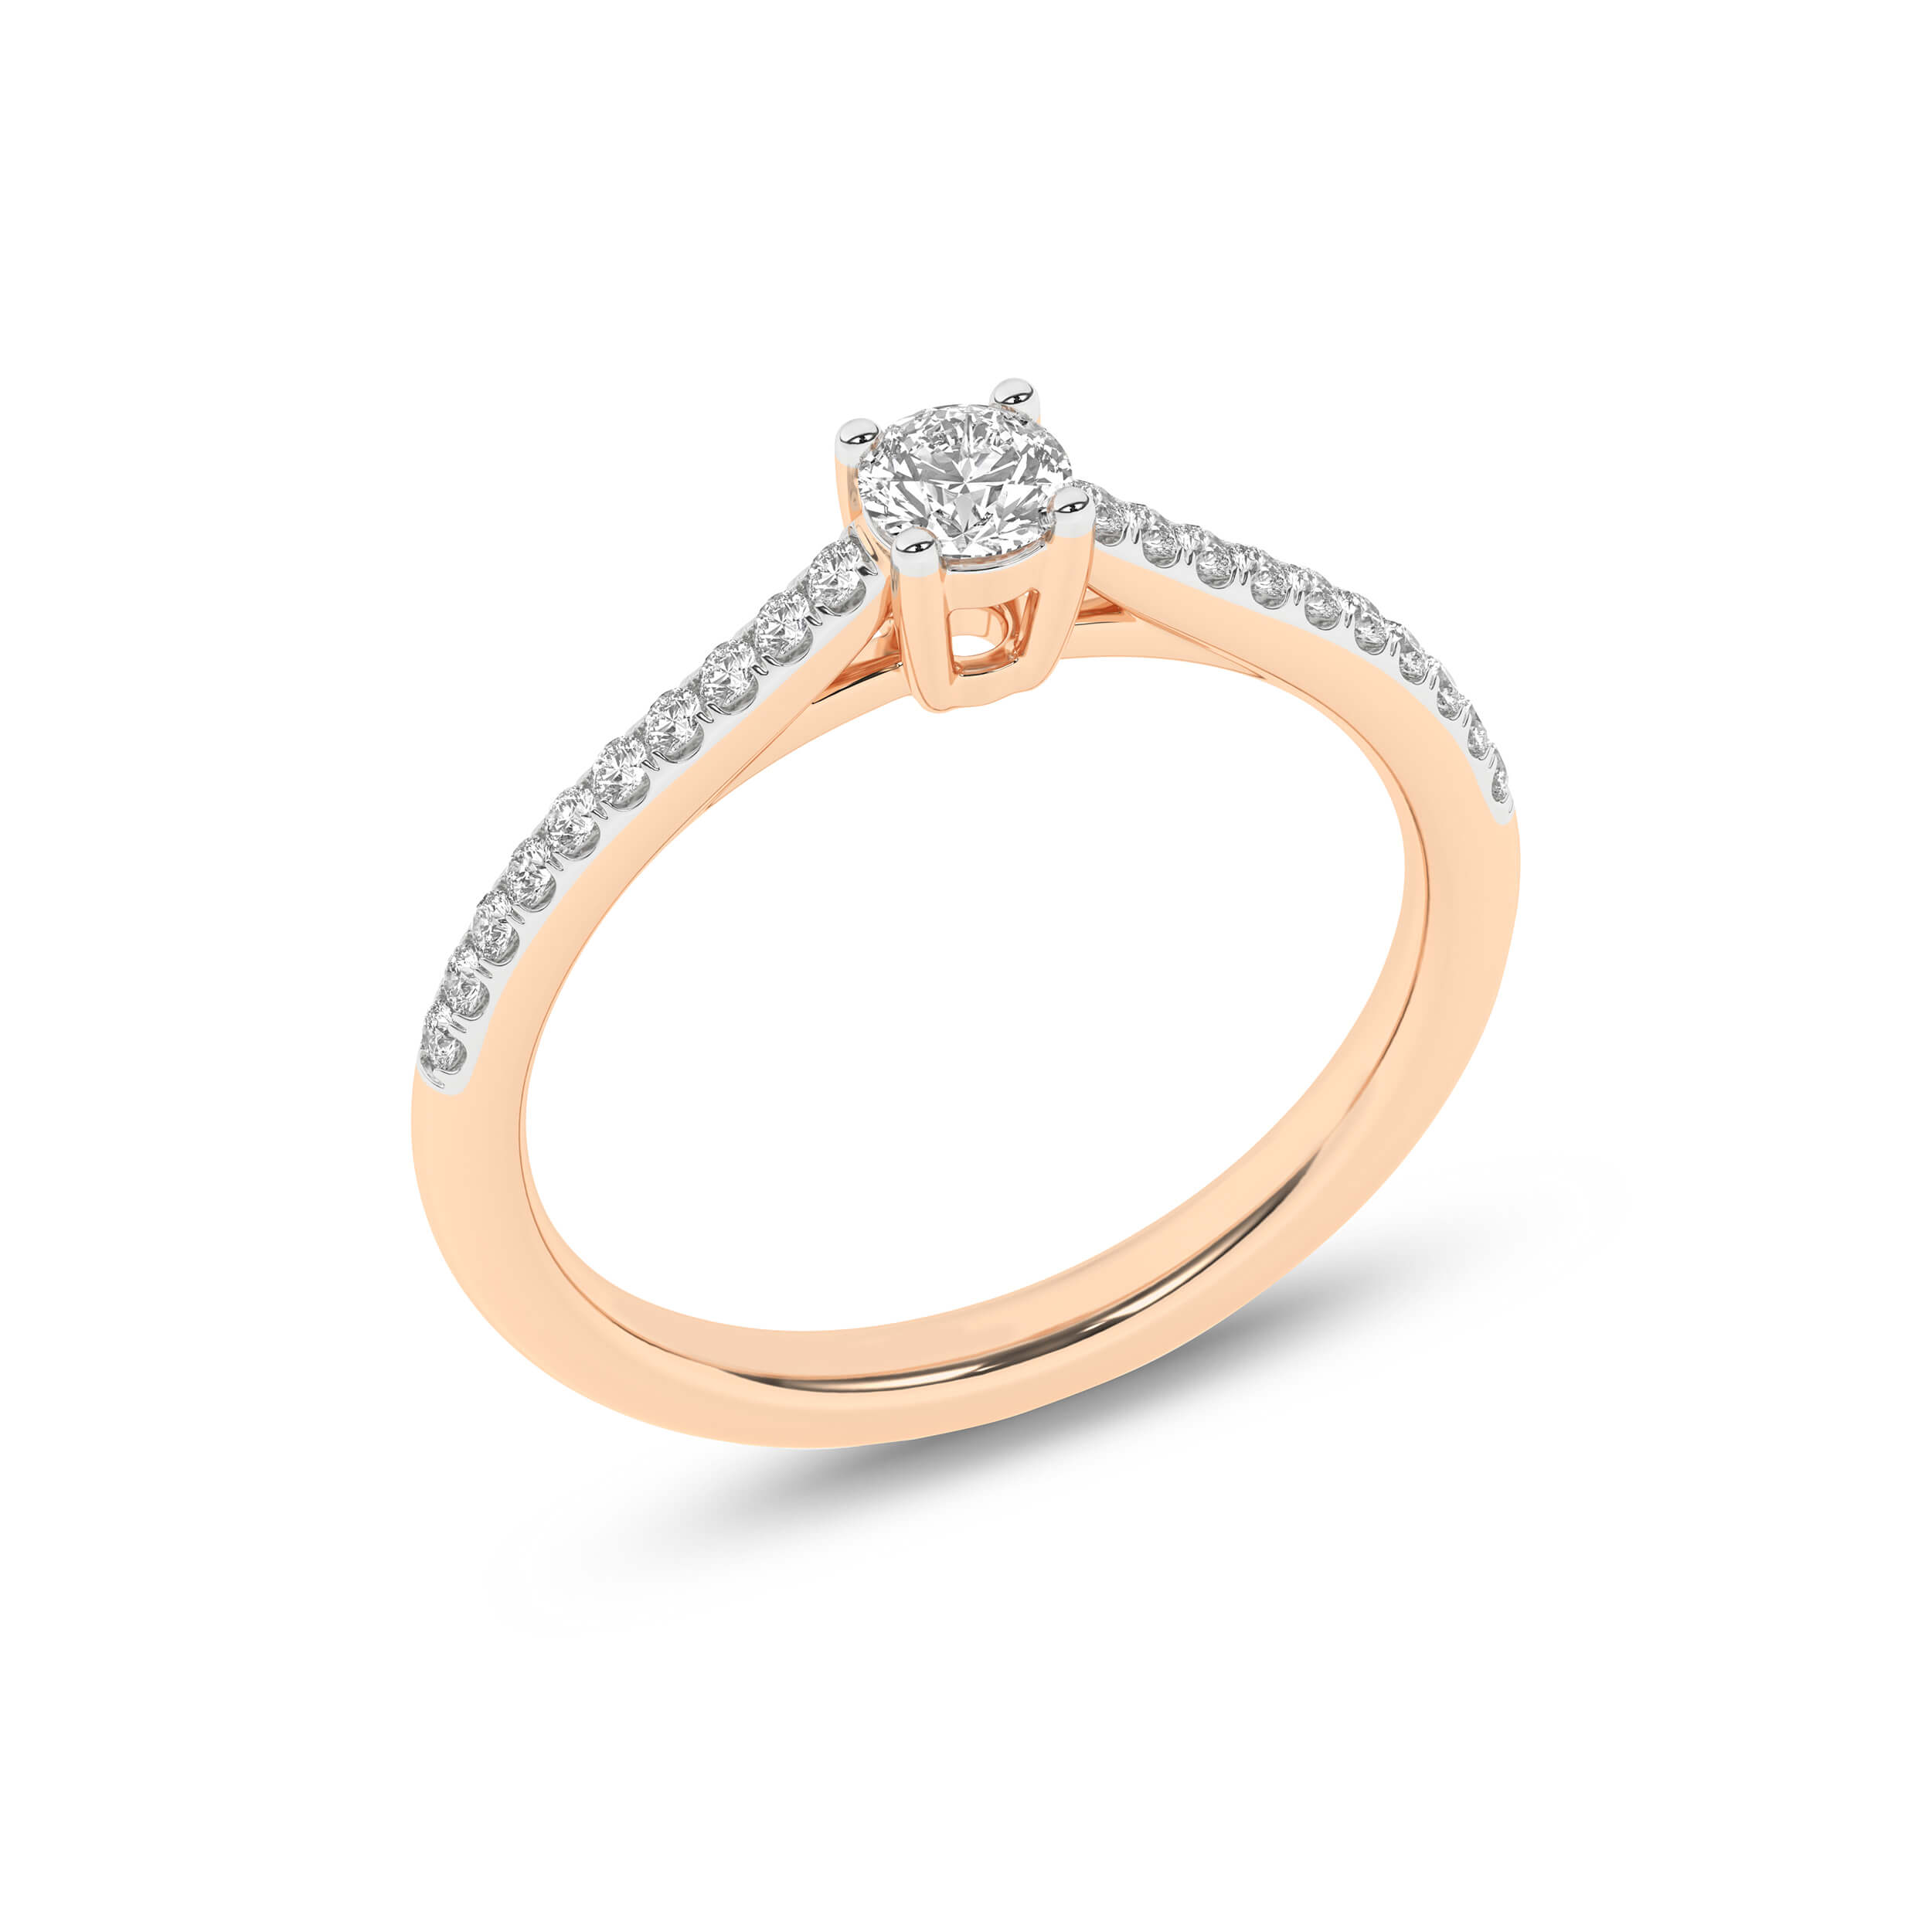 Inel de logodna din Aur Roz 14K cu Diamante 0.25Ct, articol RB19582EG, previzualizare foto 4